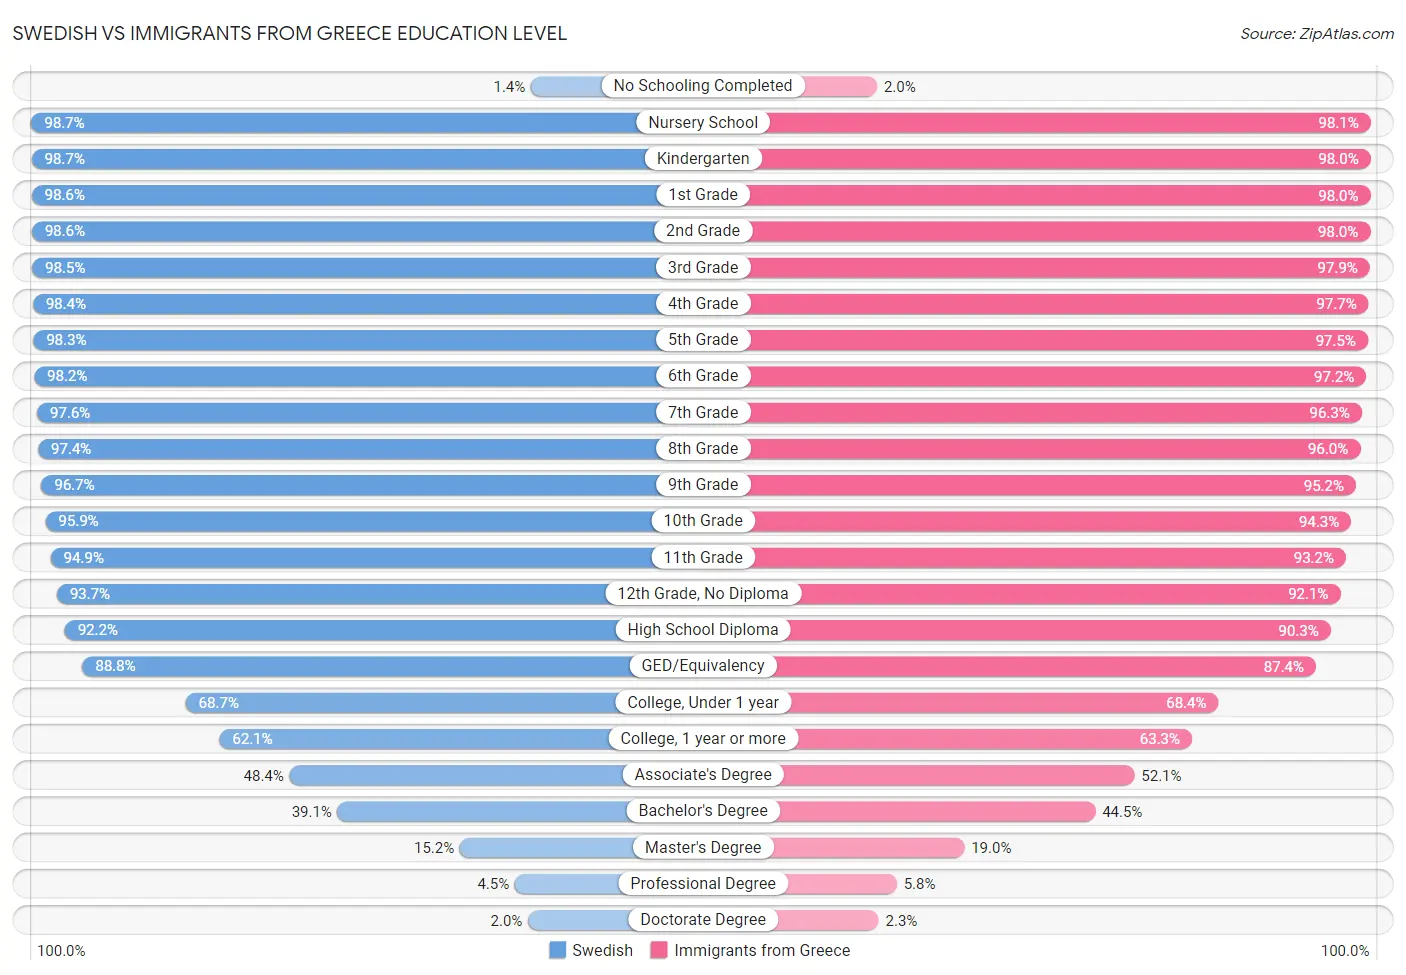 Swedish vs Immigrants from Greece Education Level